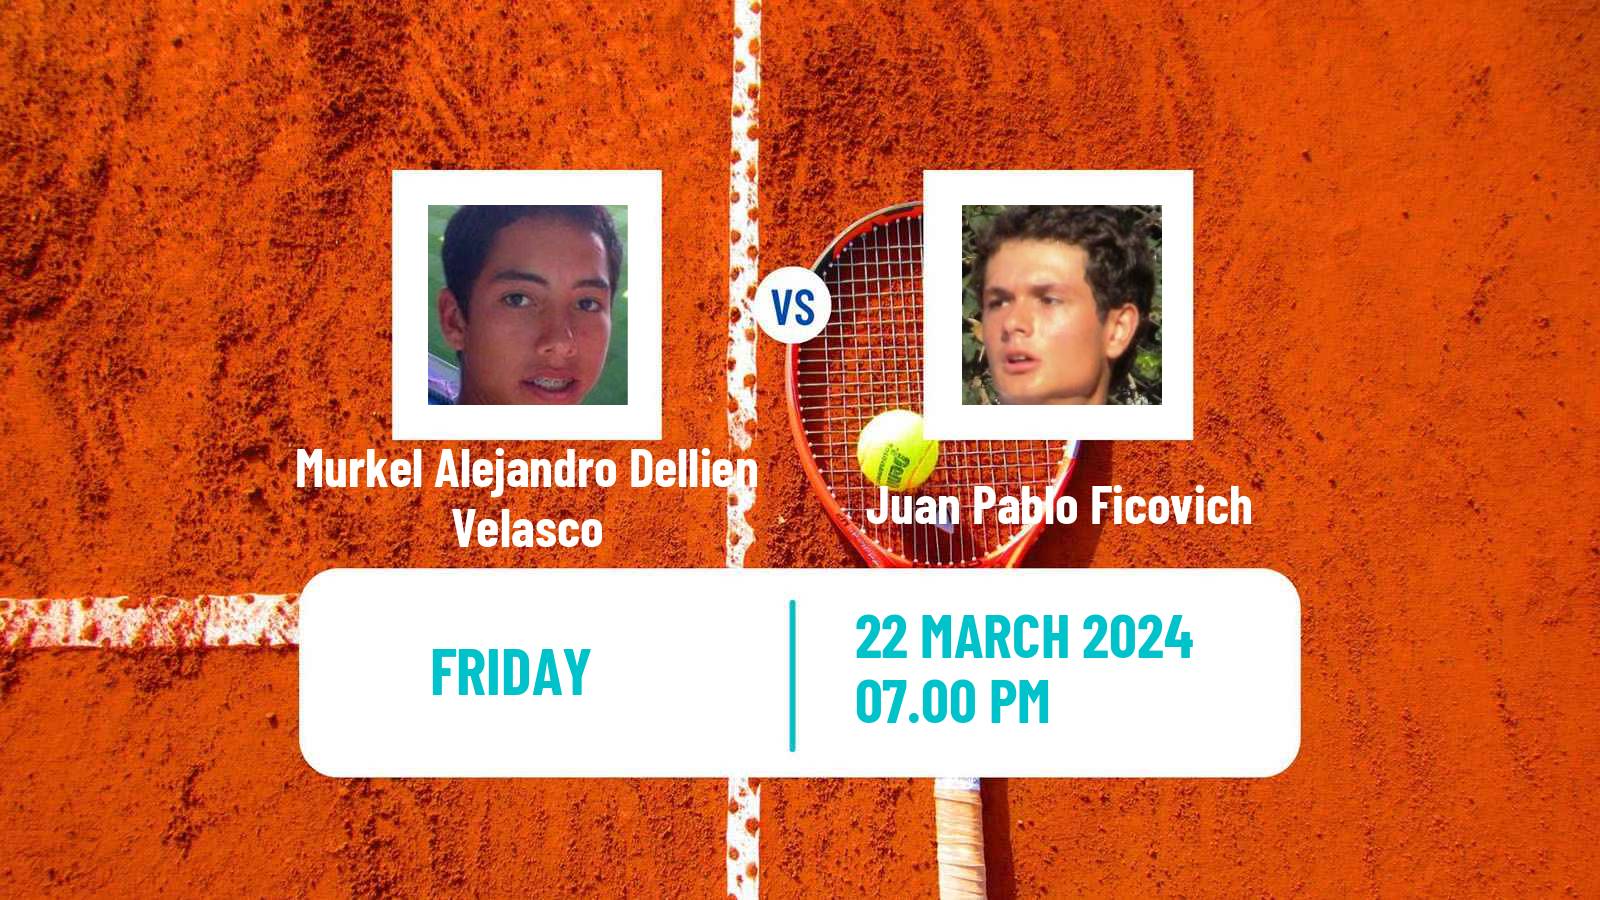 Tennis Merida Challenger Men Murkel Alejandro Dellien Velasco - Juan Pablo Ficovich